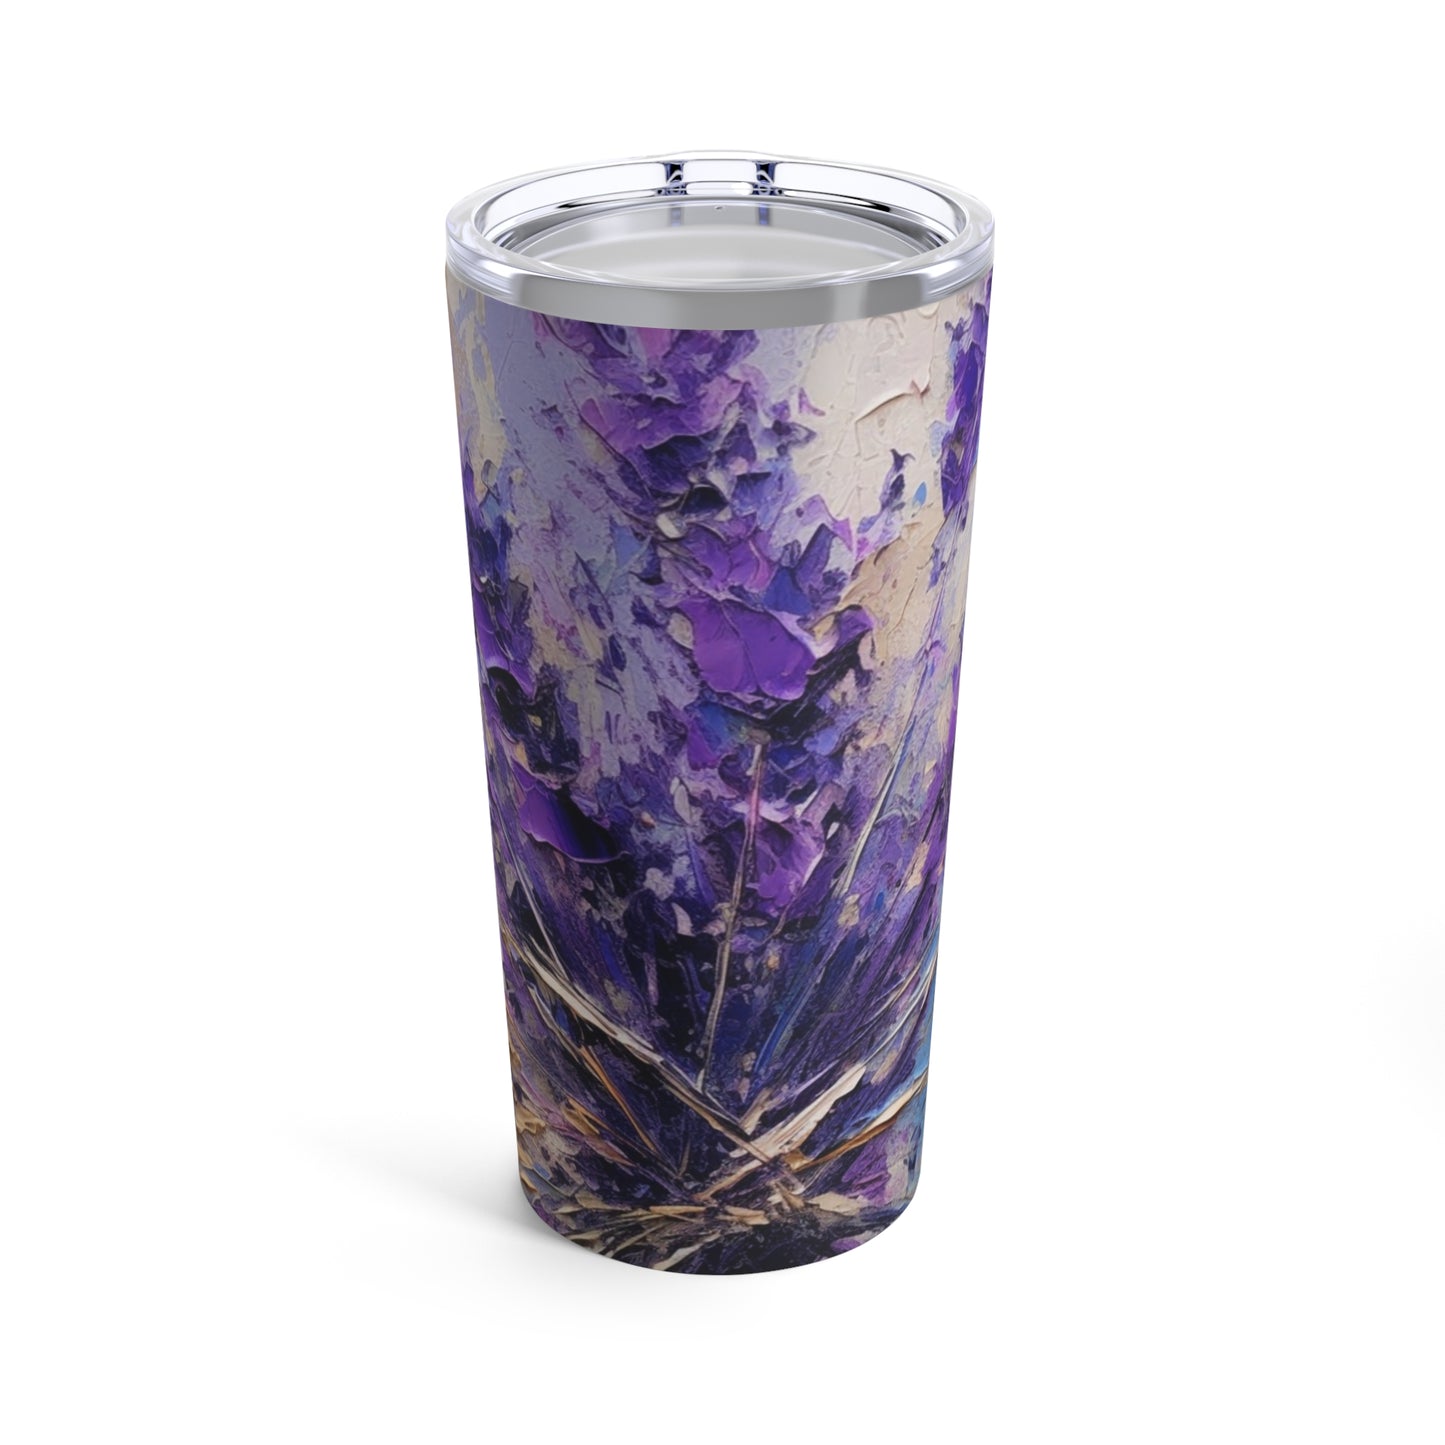 Vibrant Lavender Art on Tumbler: A Floral Delight for Your Senses